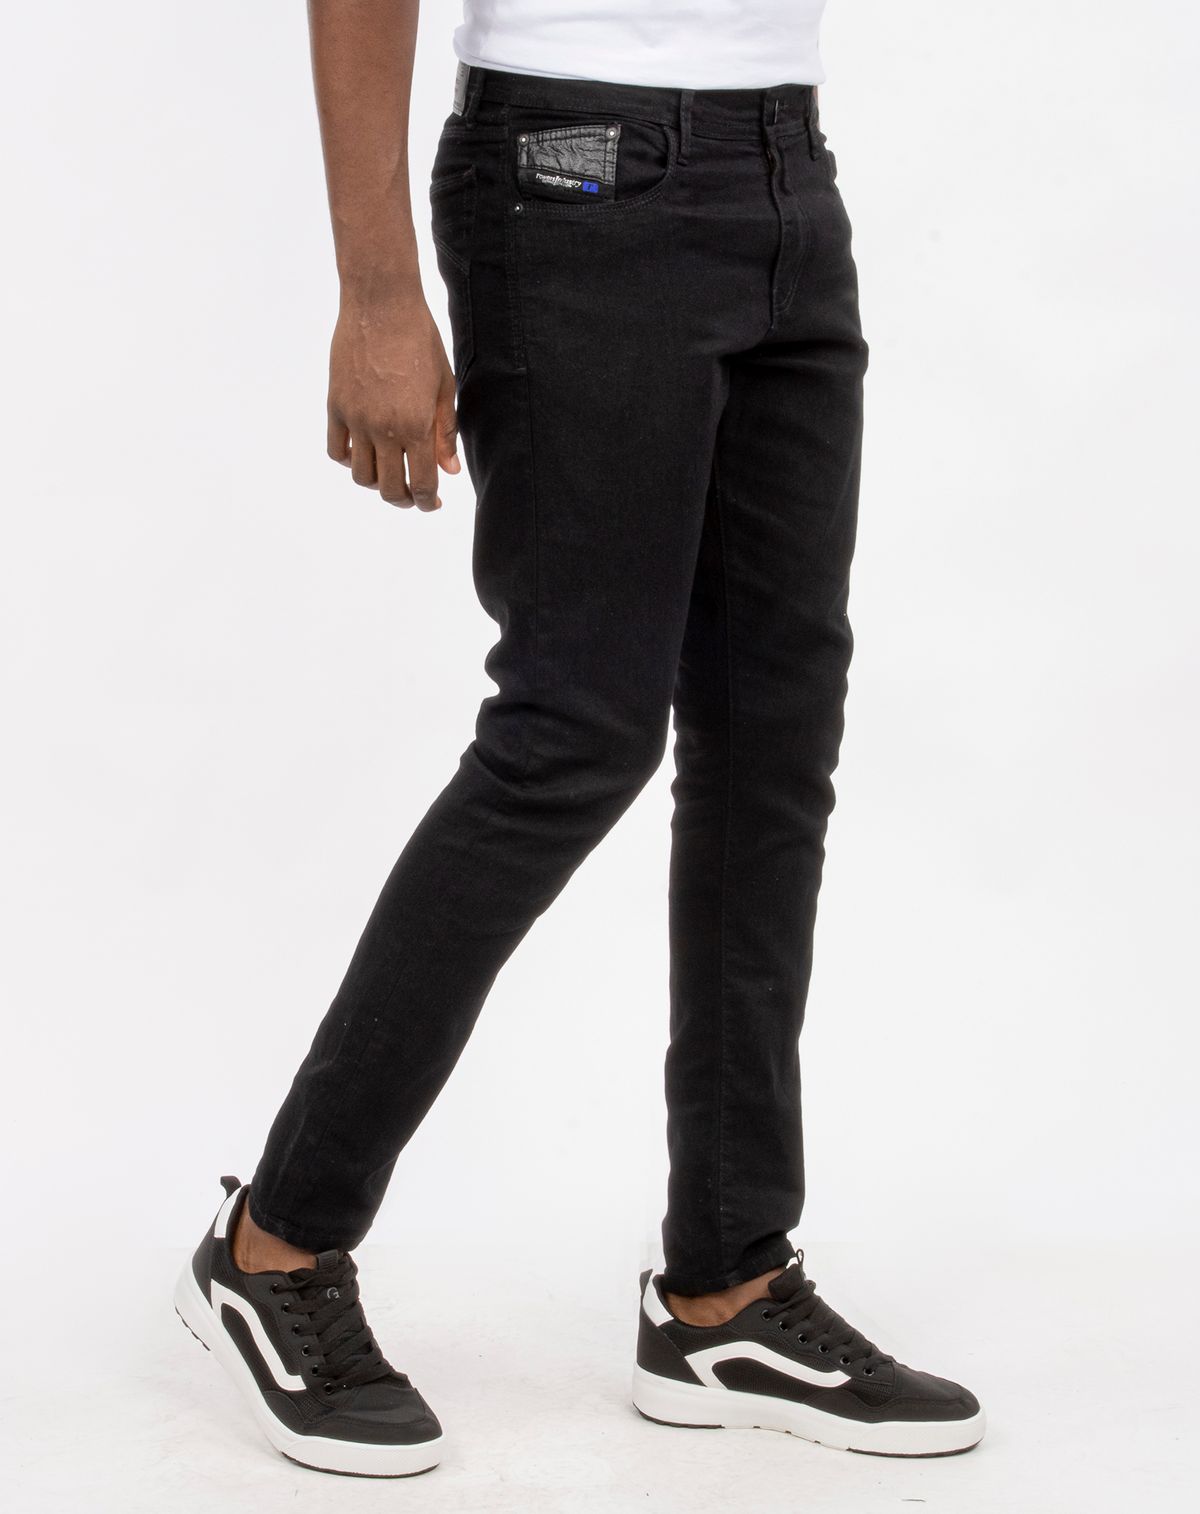 594413002-calca-jeans-black-skinny-masculina-jeans-black-40-c1e